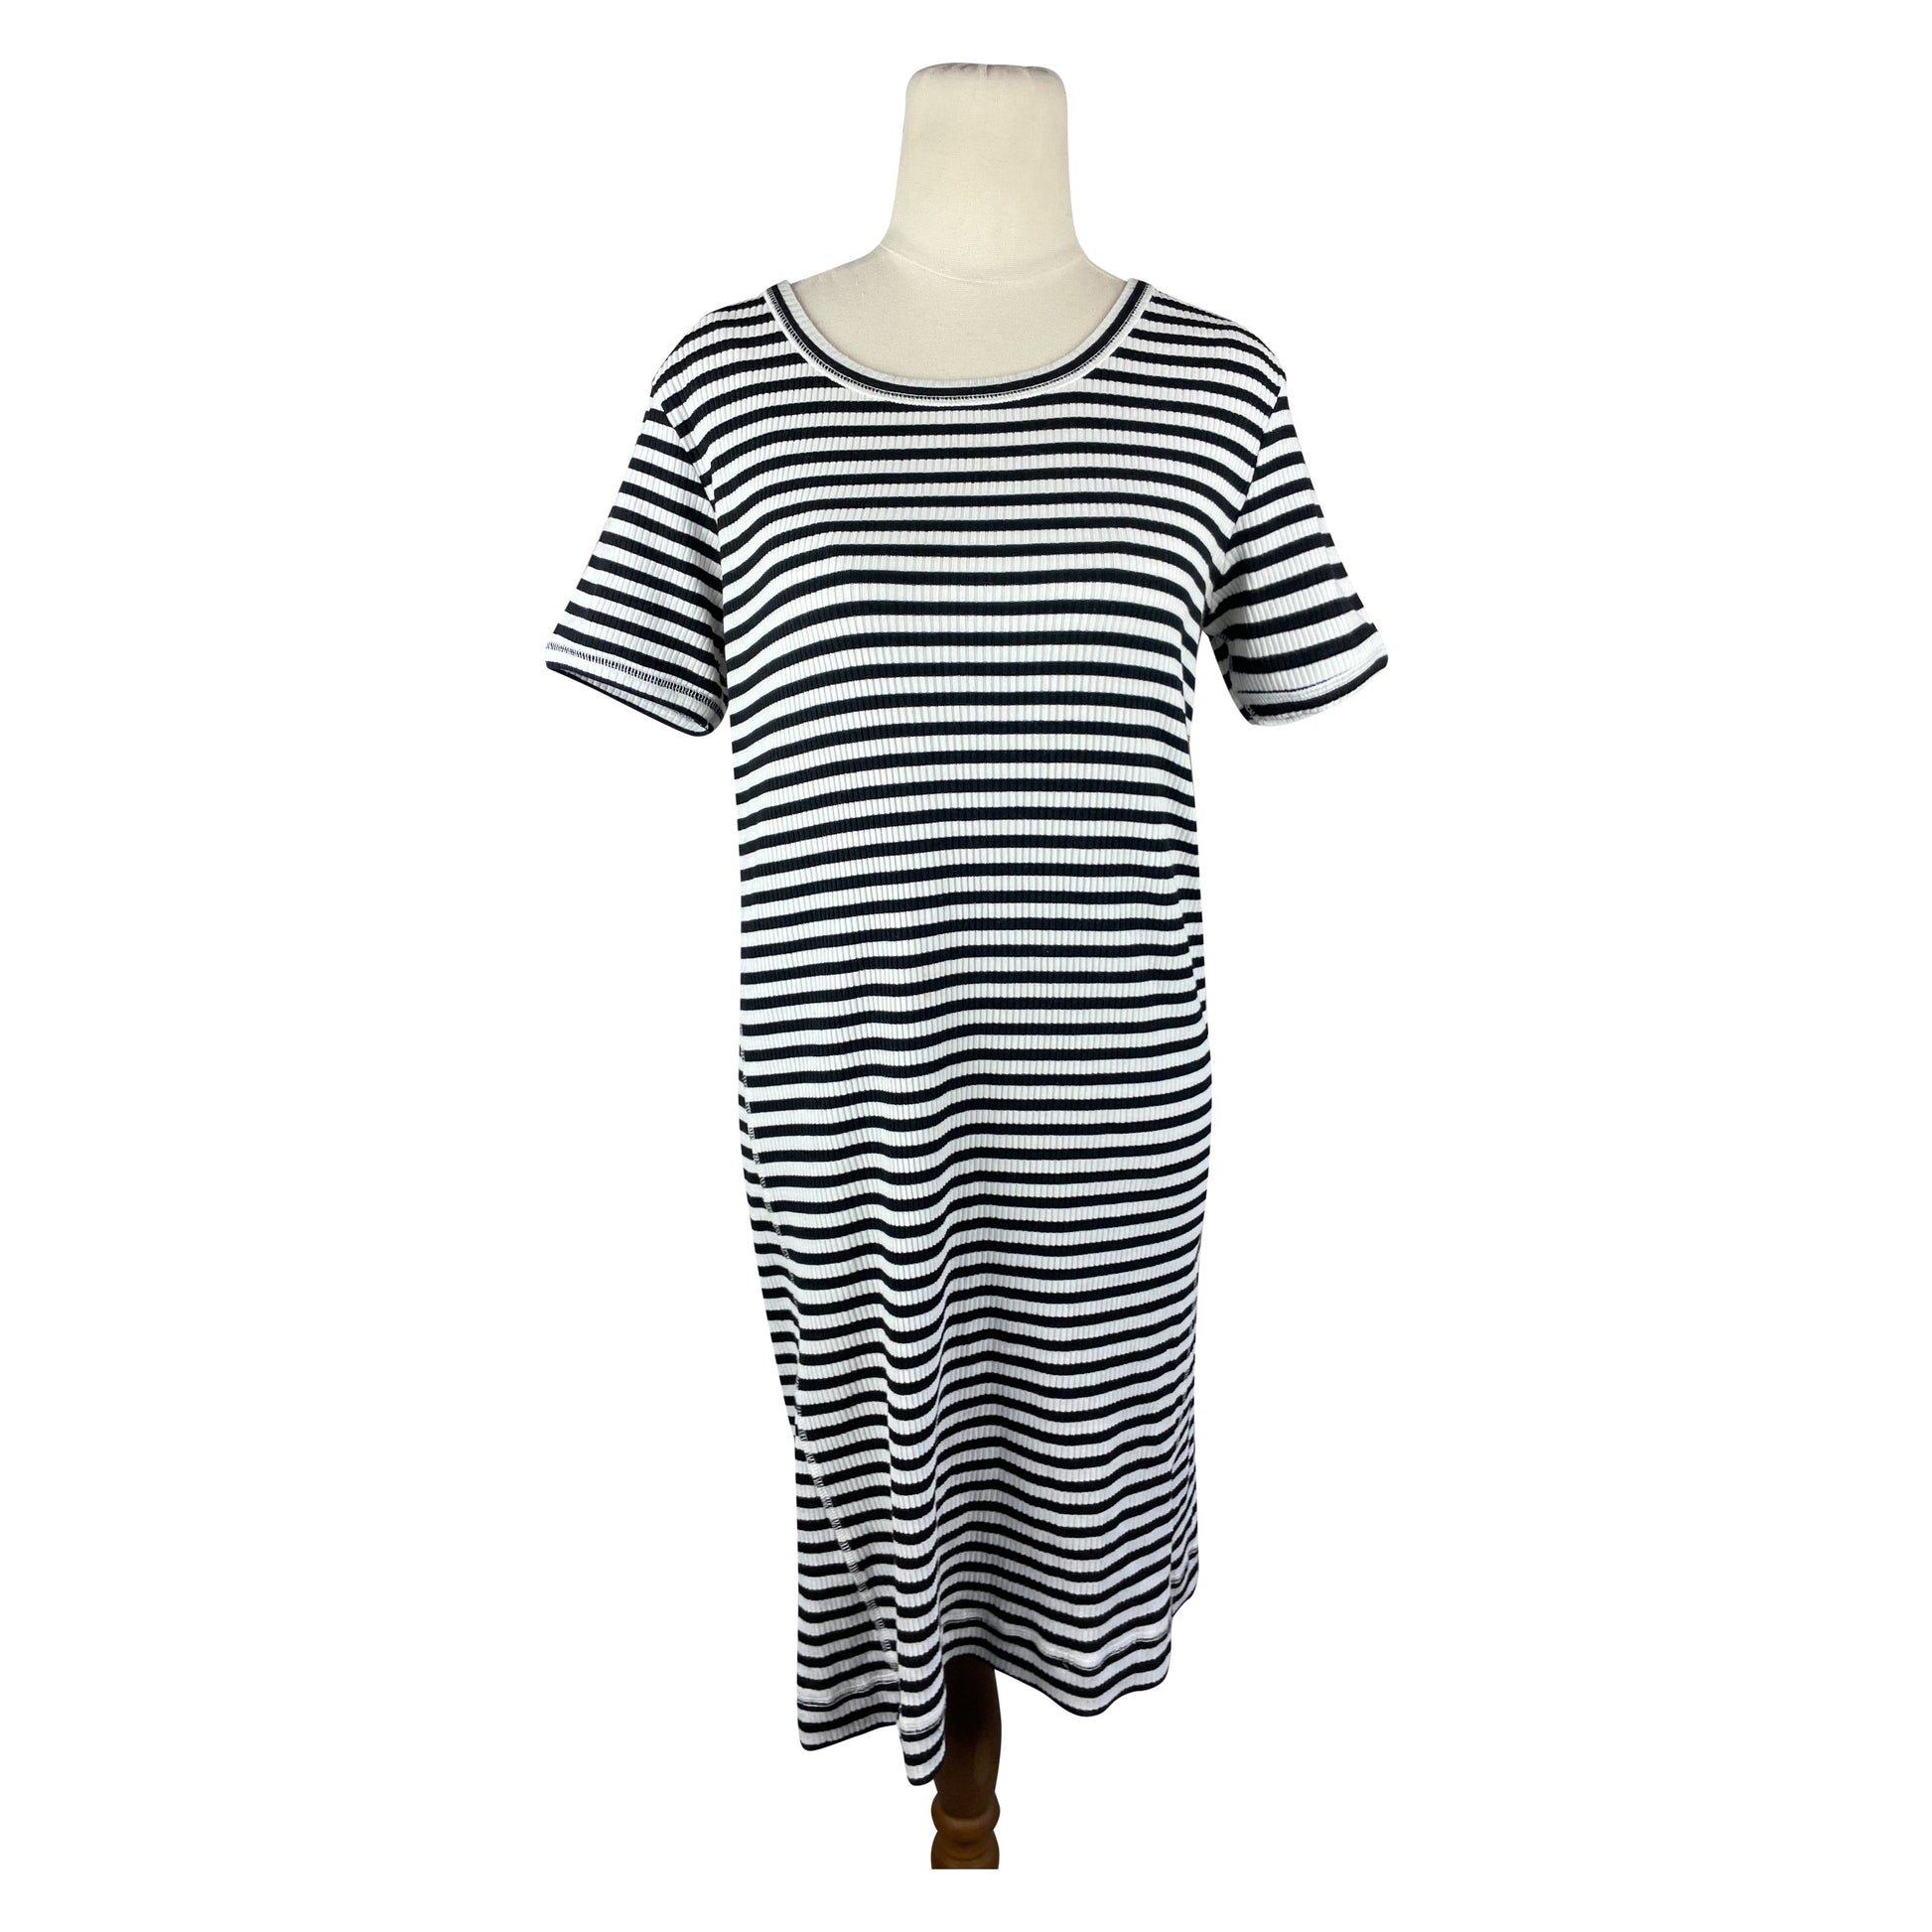 Storm white dress w black stripes | size 12